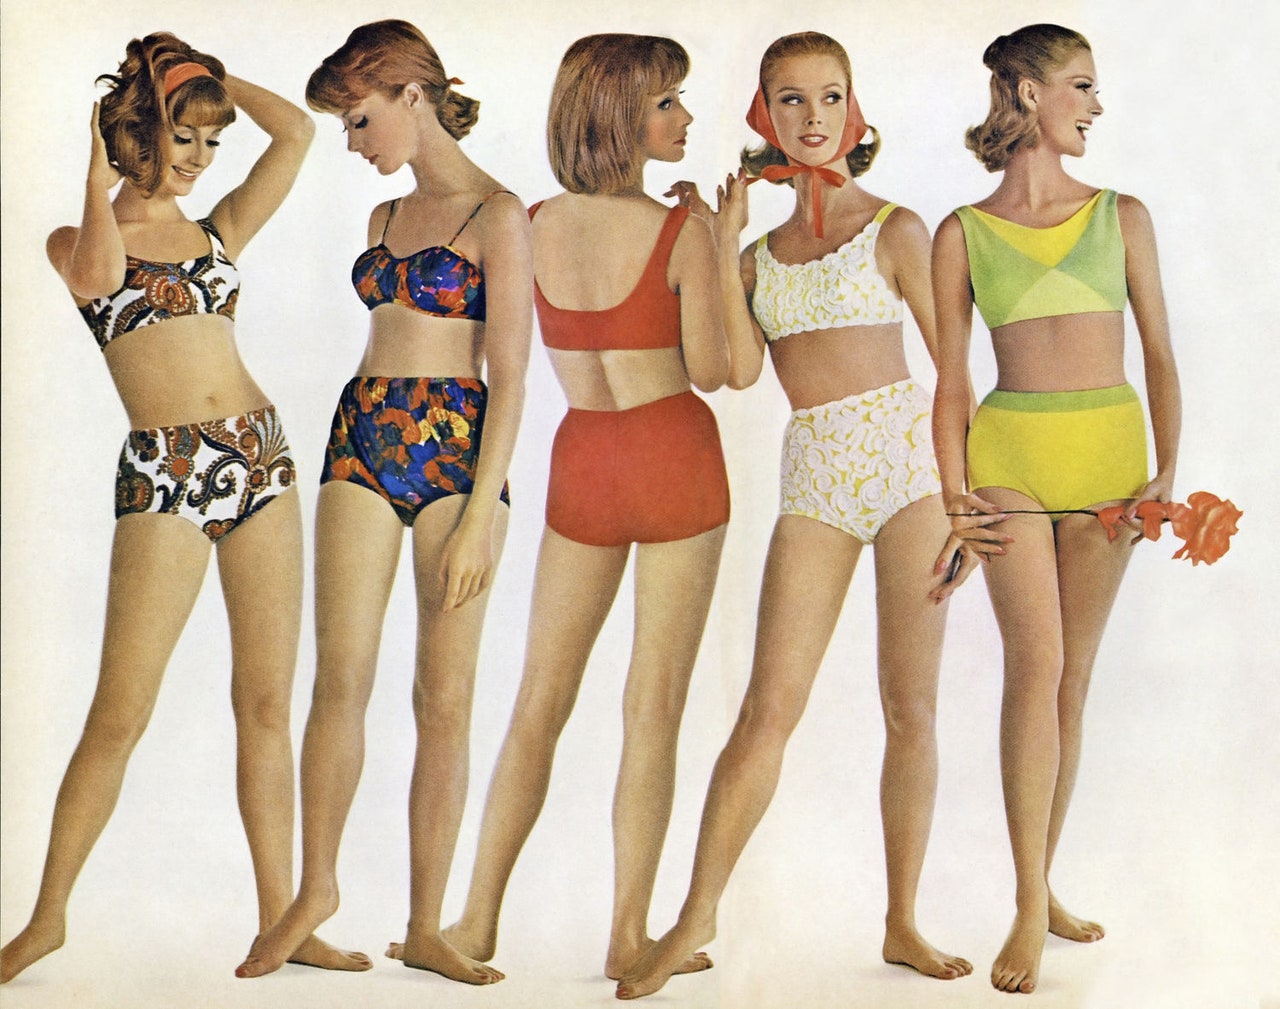  Glamour Vintage Bikini Print Ads | Glamour